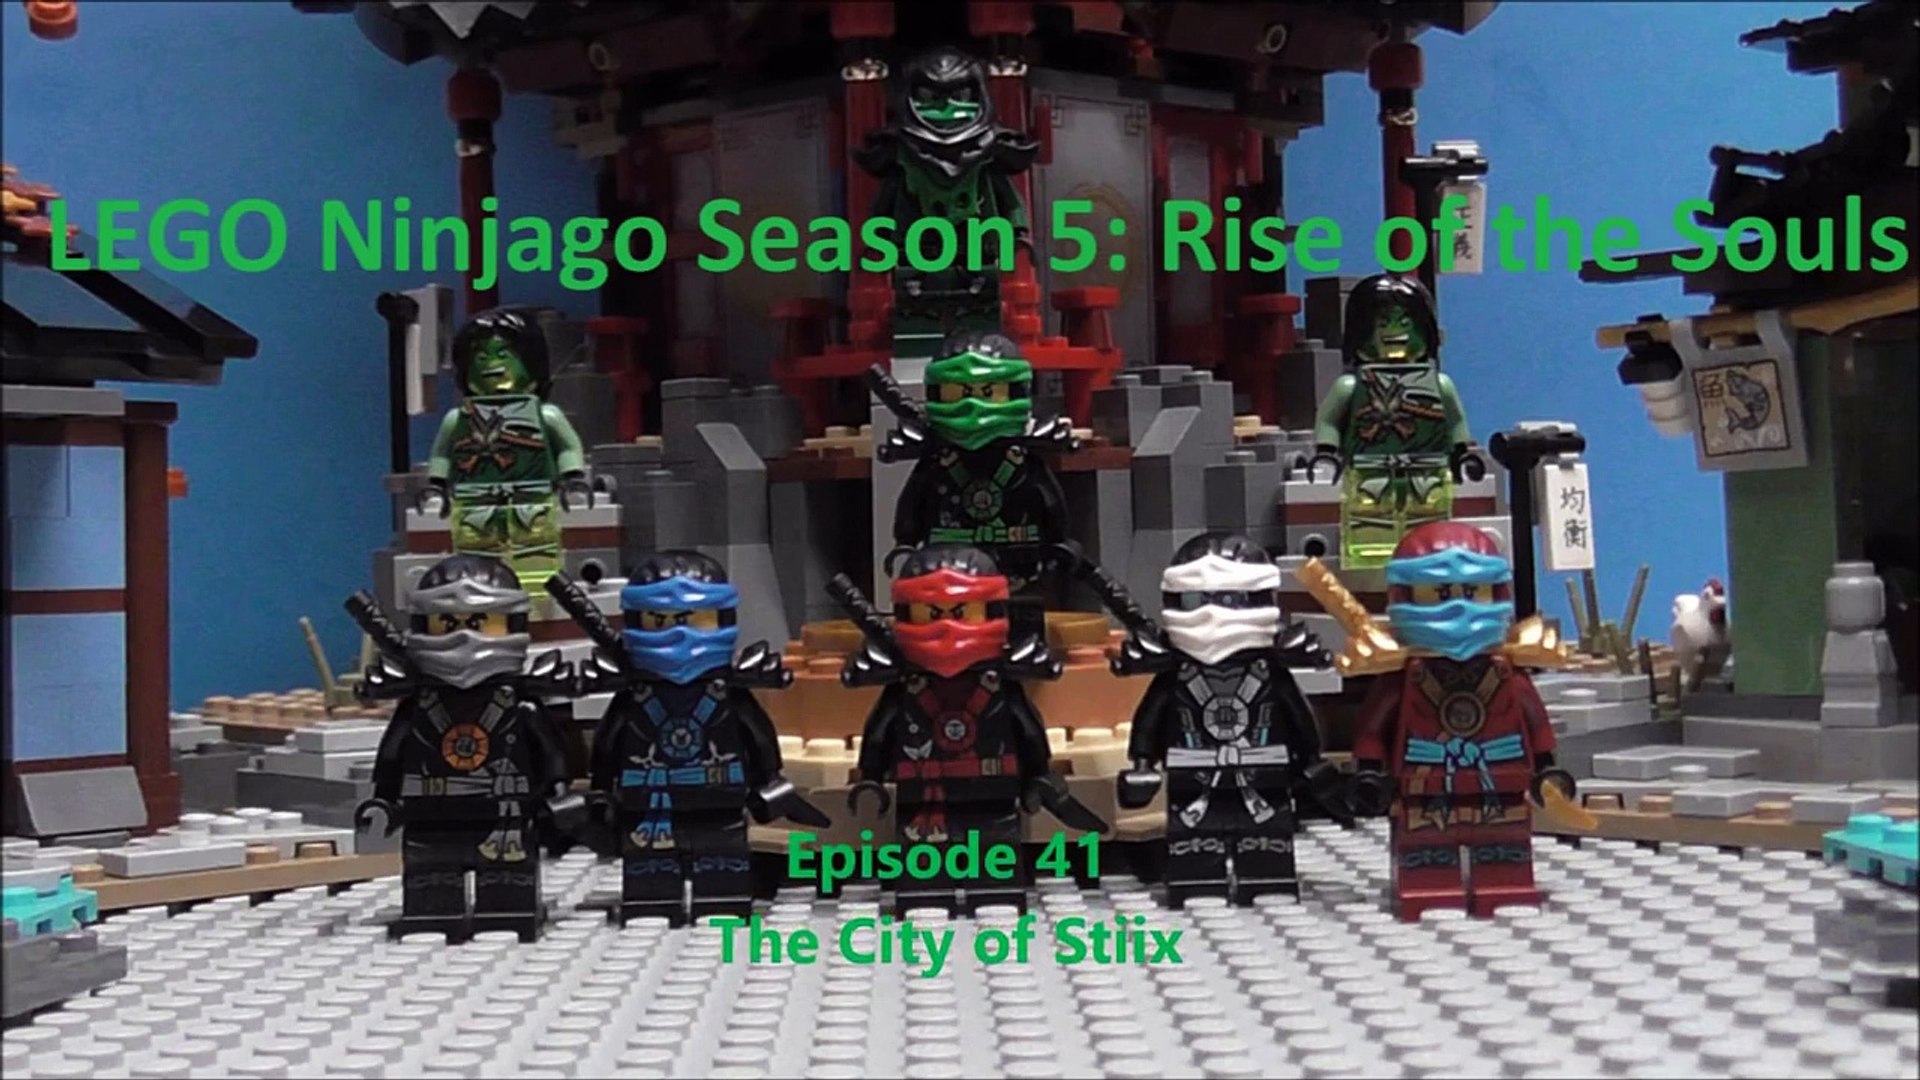 LEGO Ninjago Episode 41: The City of Stiix! - video Dailymotion